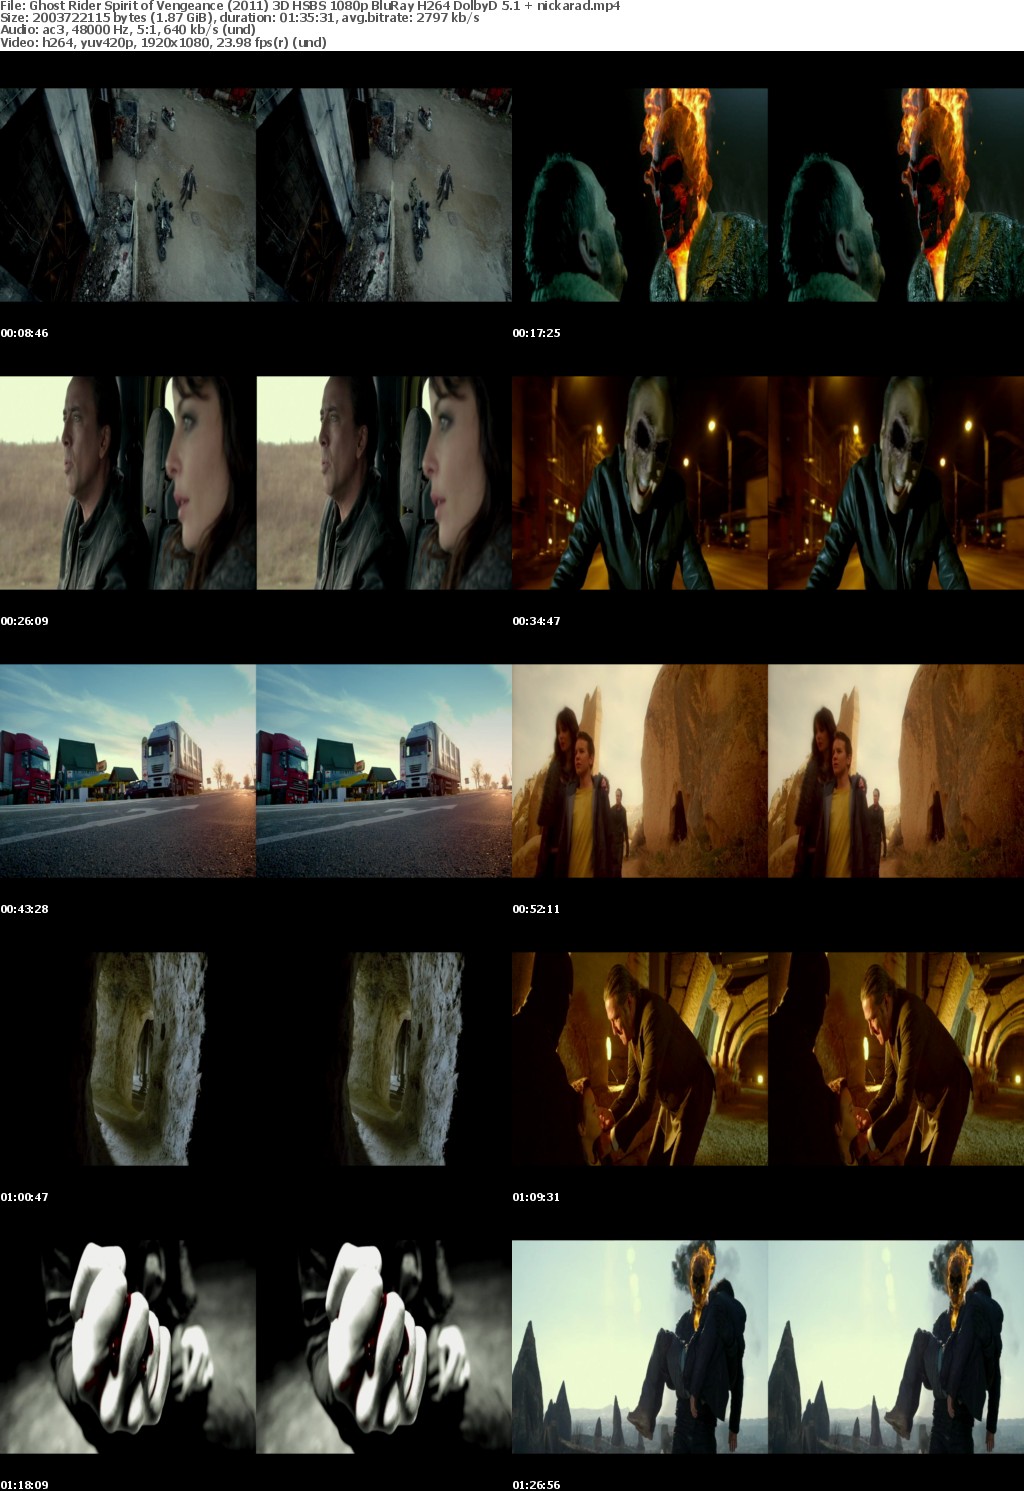 Ghost Rider Spirit of Vengeance (2011) 3D HSBS 1080p BluRay H264 DolbyD 5 1 nickarad